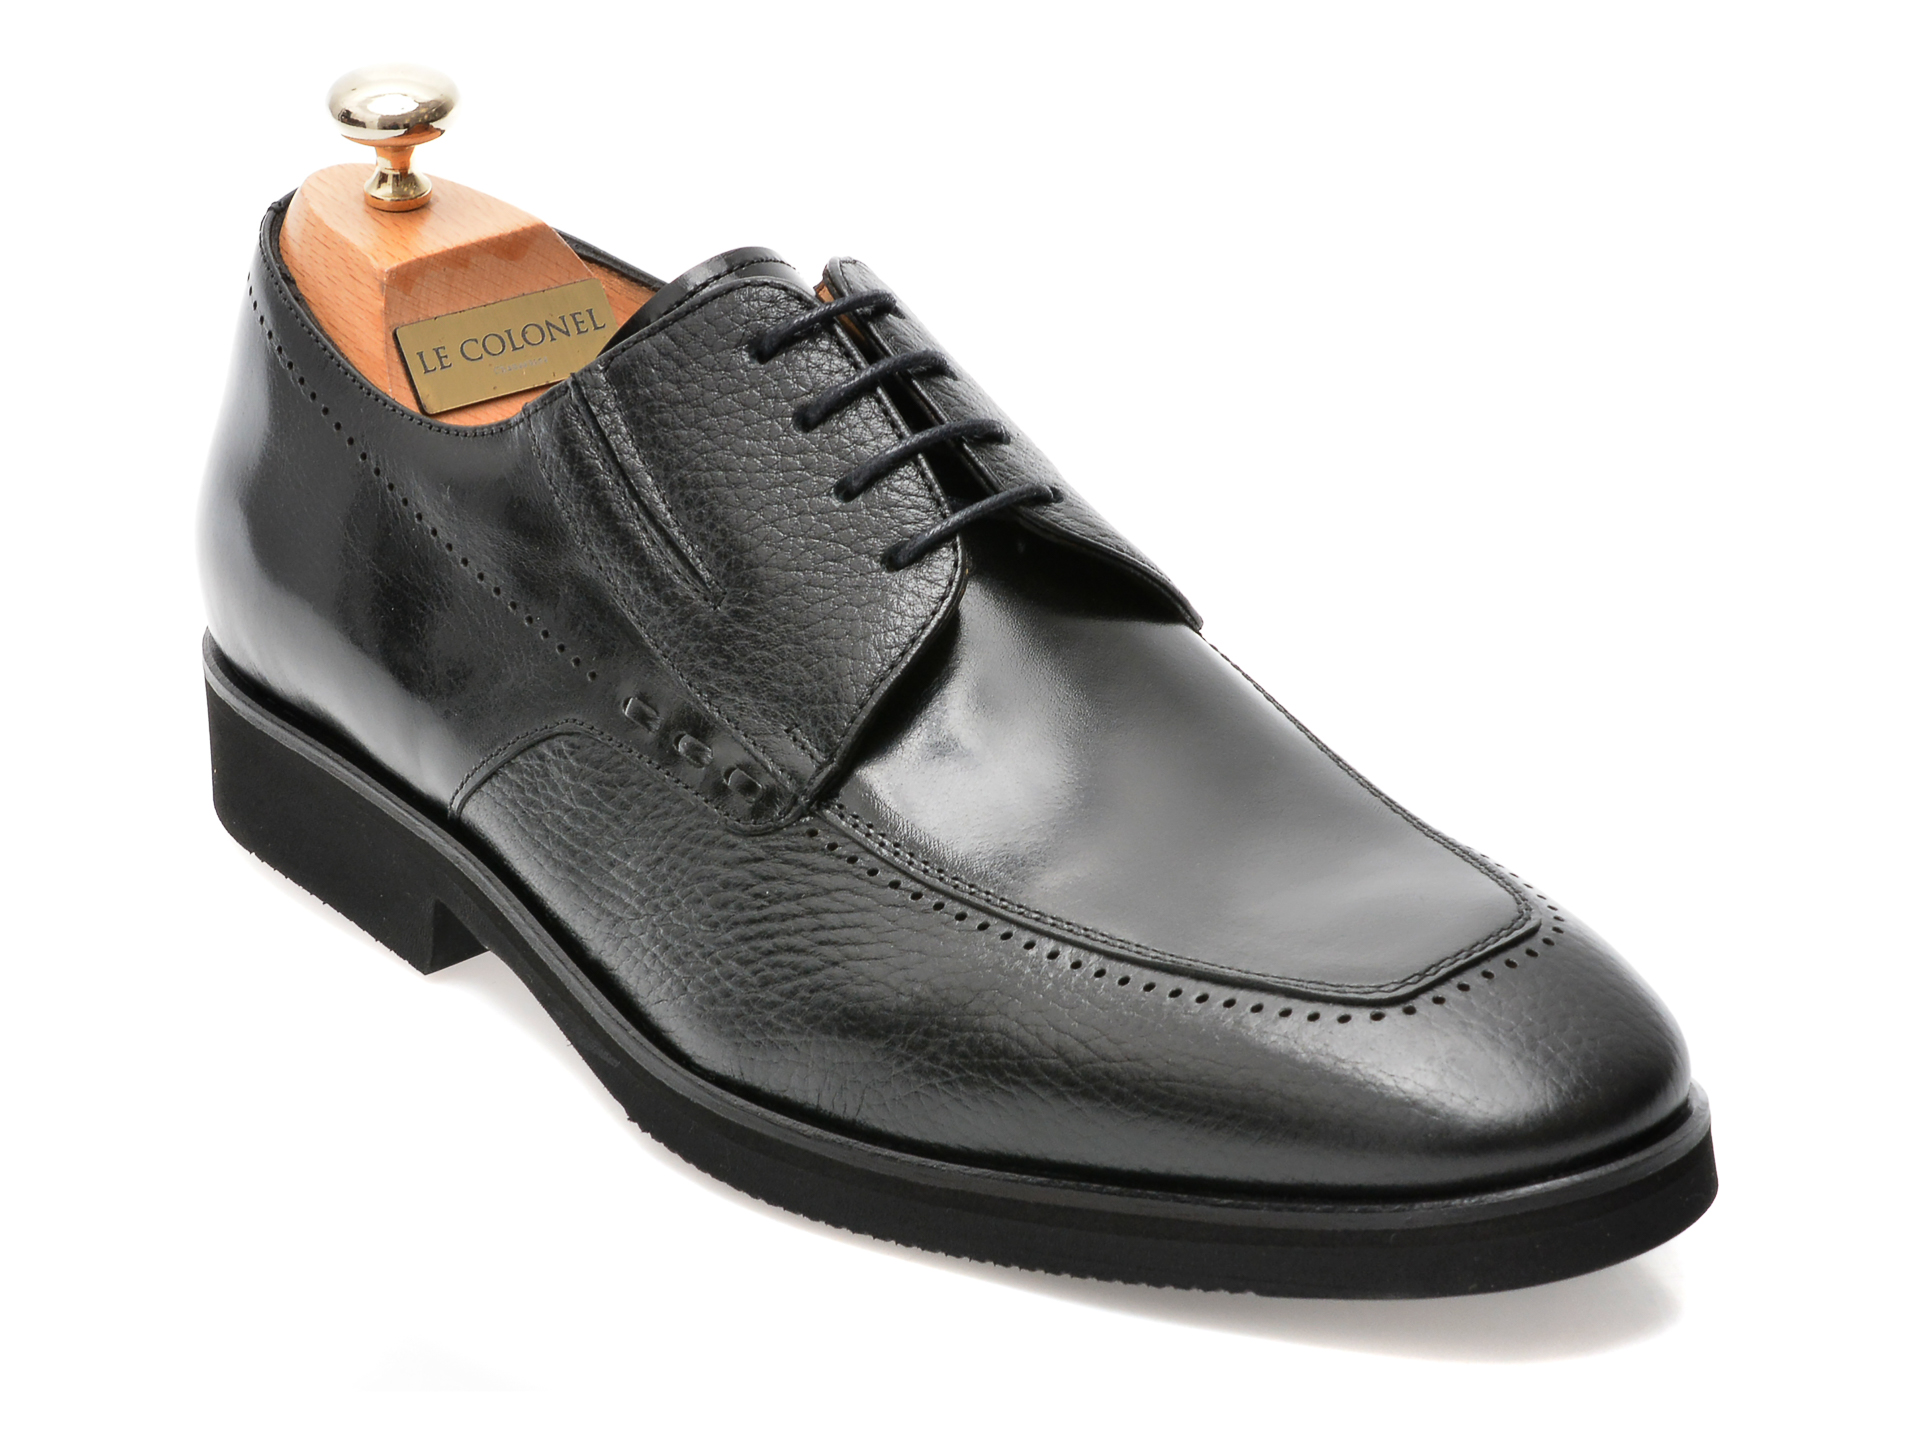 Pantofi LE COLONEL negri, 48701, din piele naturala /barbati/pantofi /barbati/pantofi